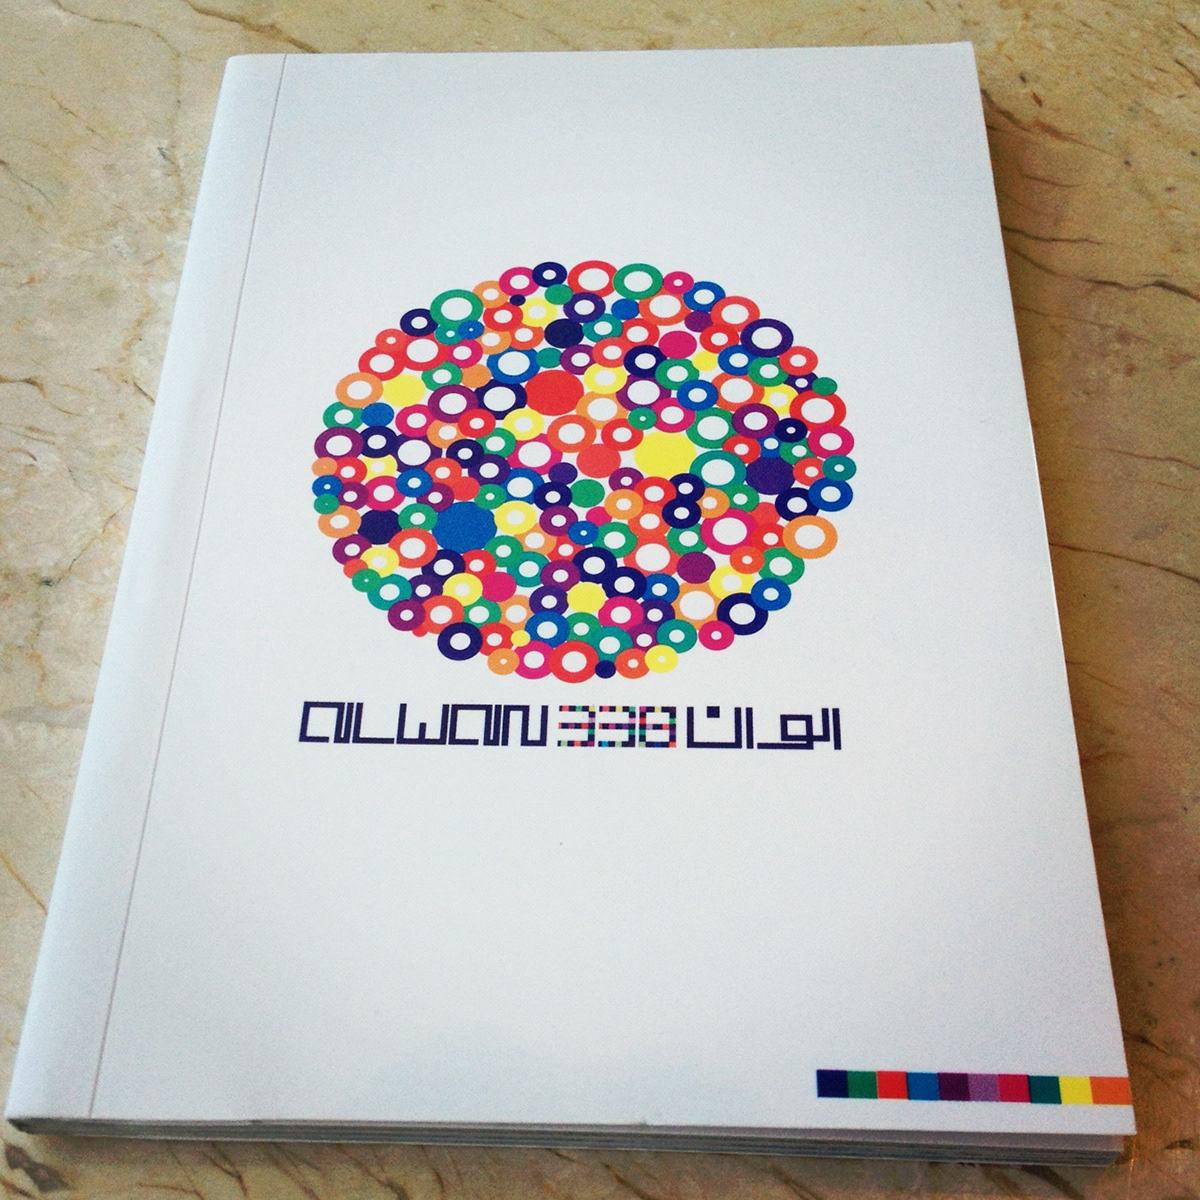 al riwaq  alwan 338  invitations manama colors circles catalog